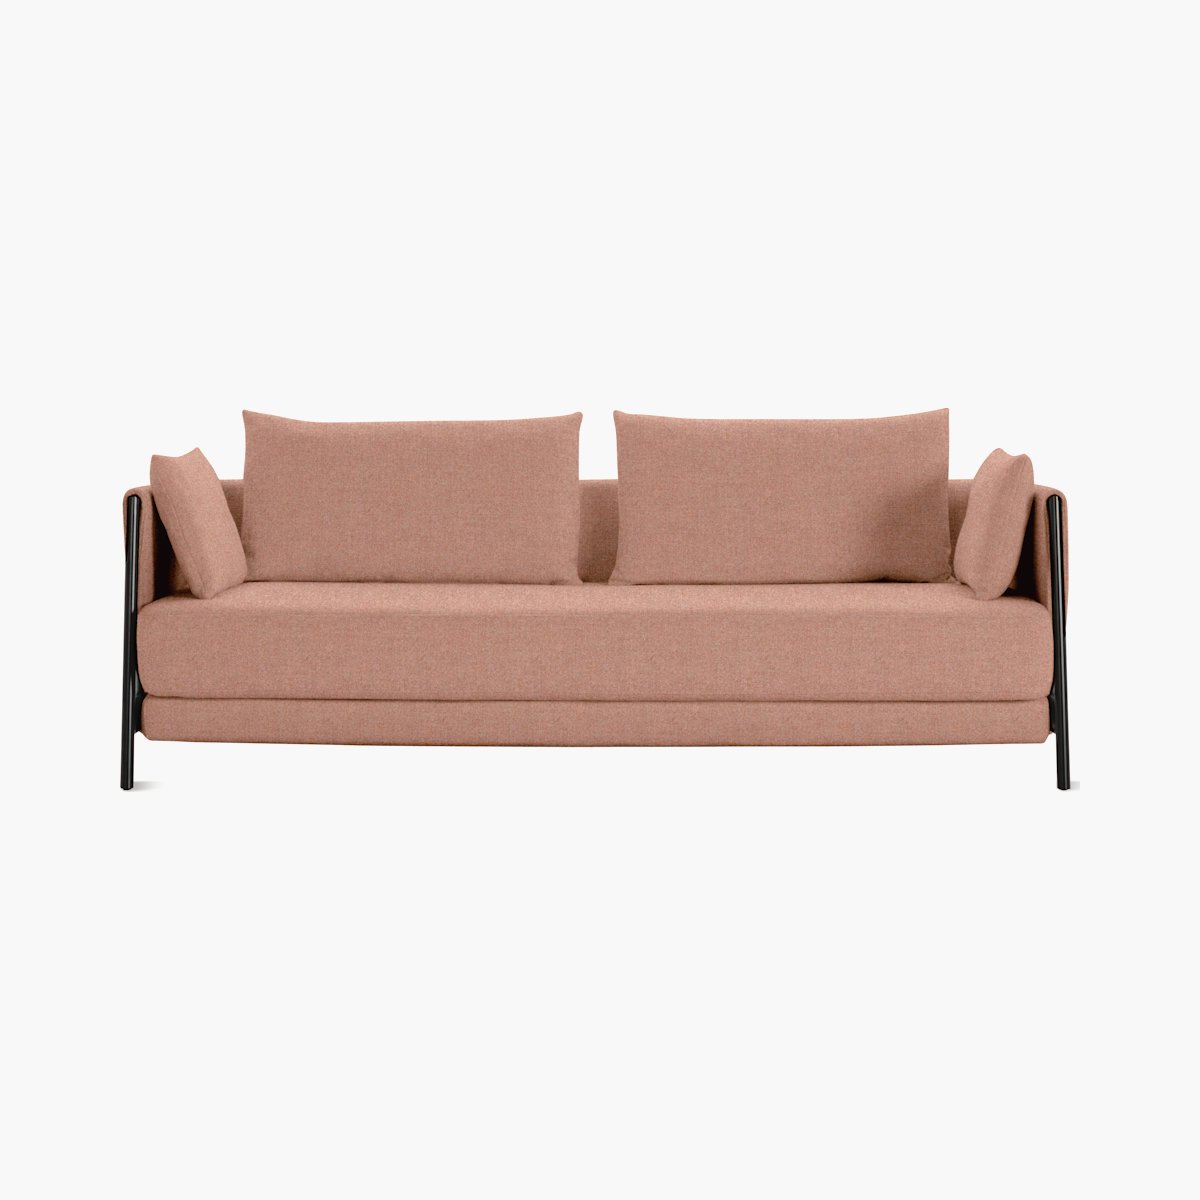 Madison Sleeper Sofa